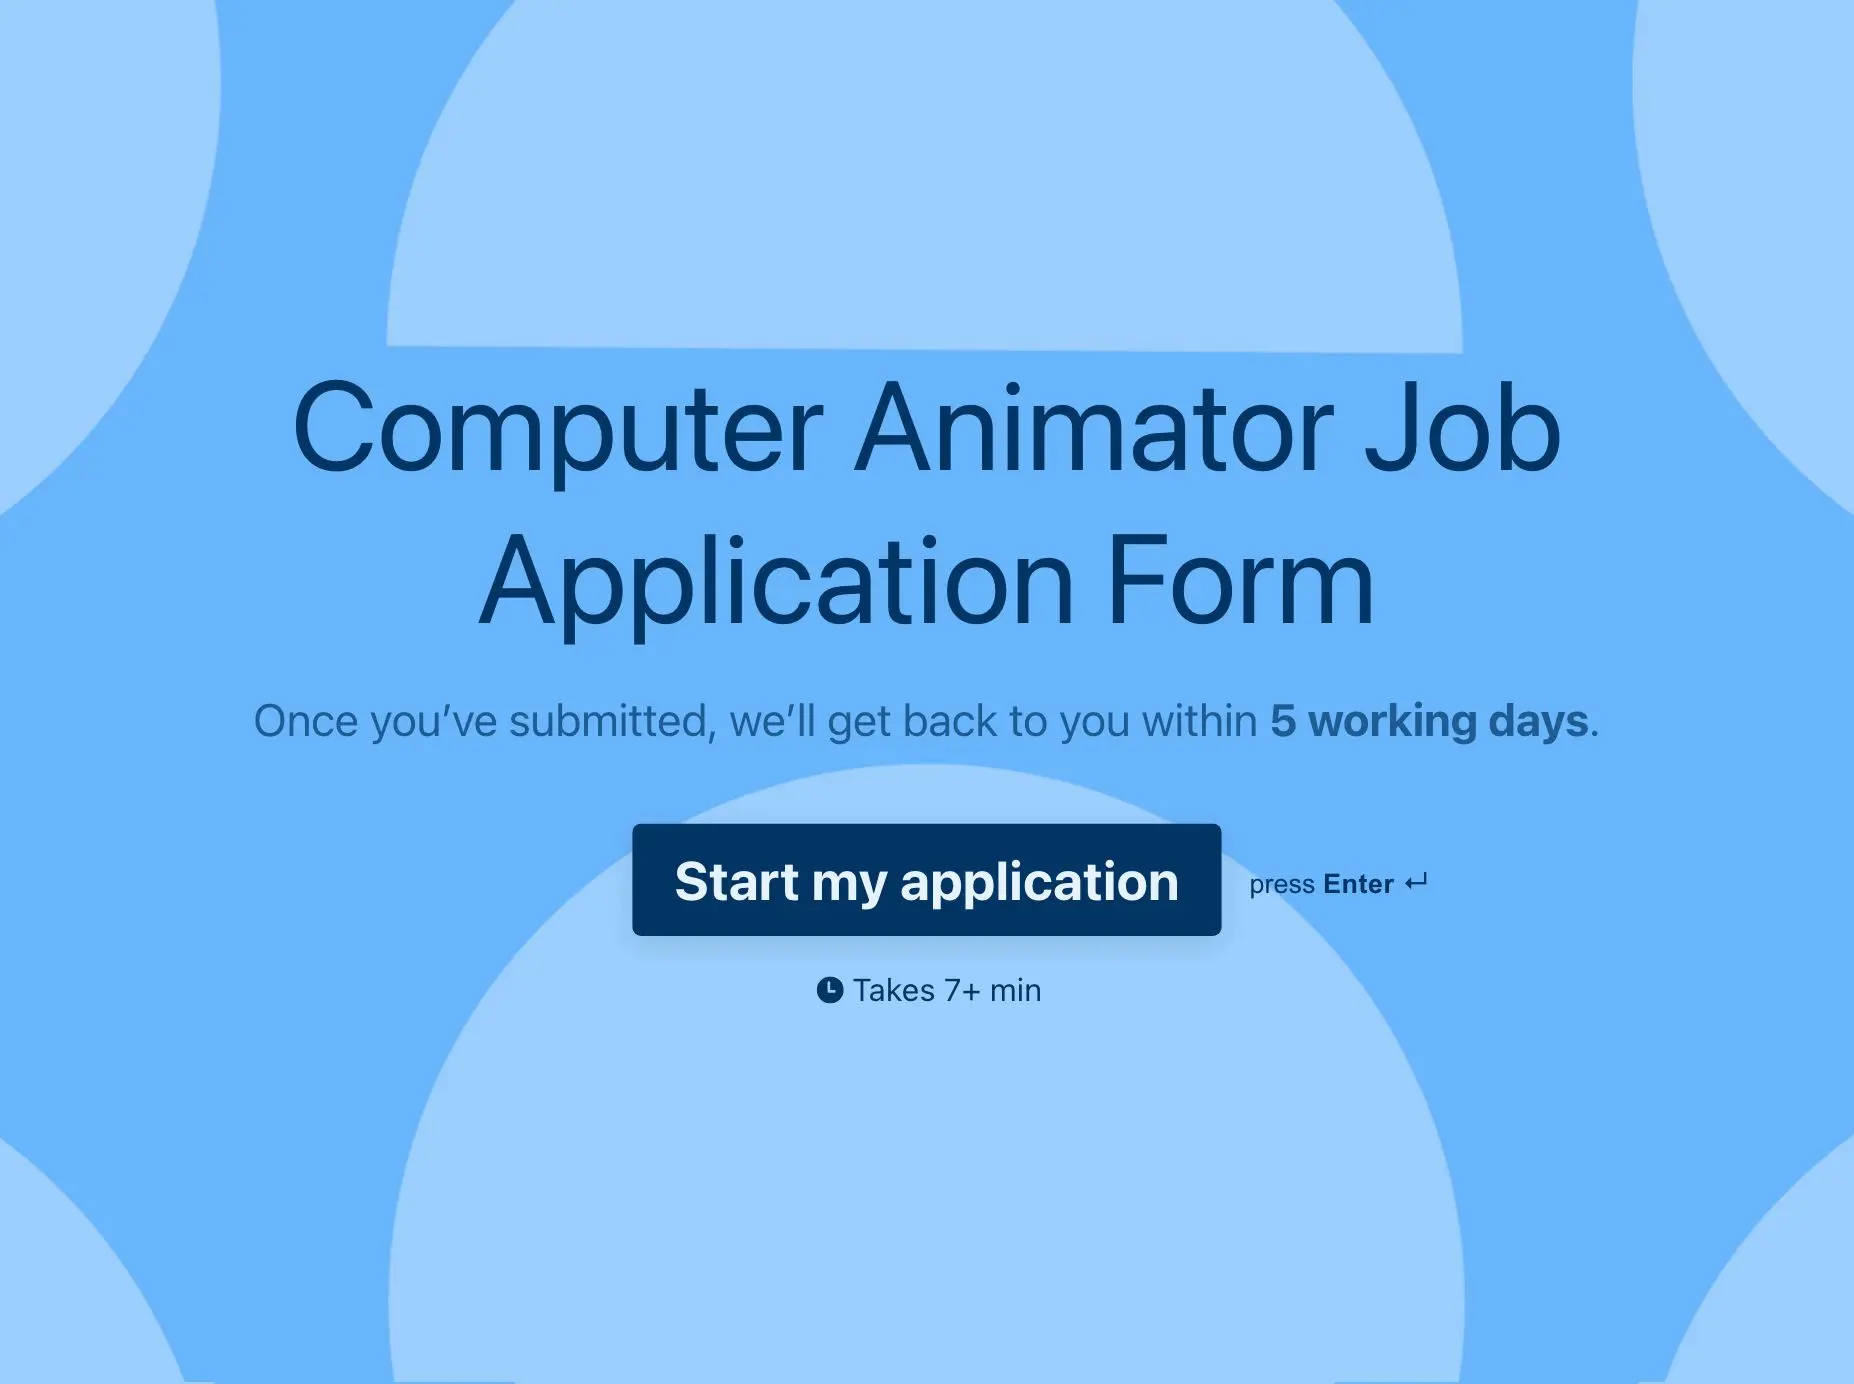 Computer Animator Job Application Form Template Hero